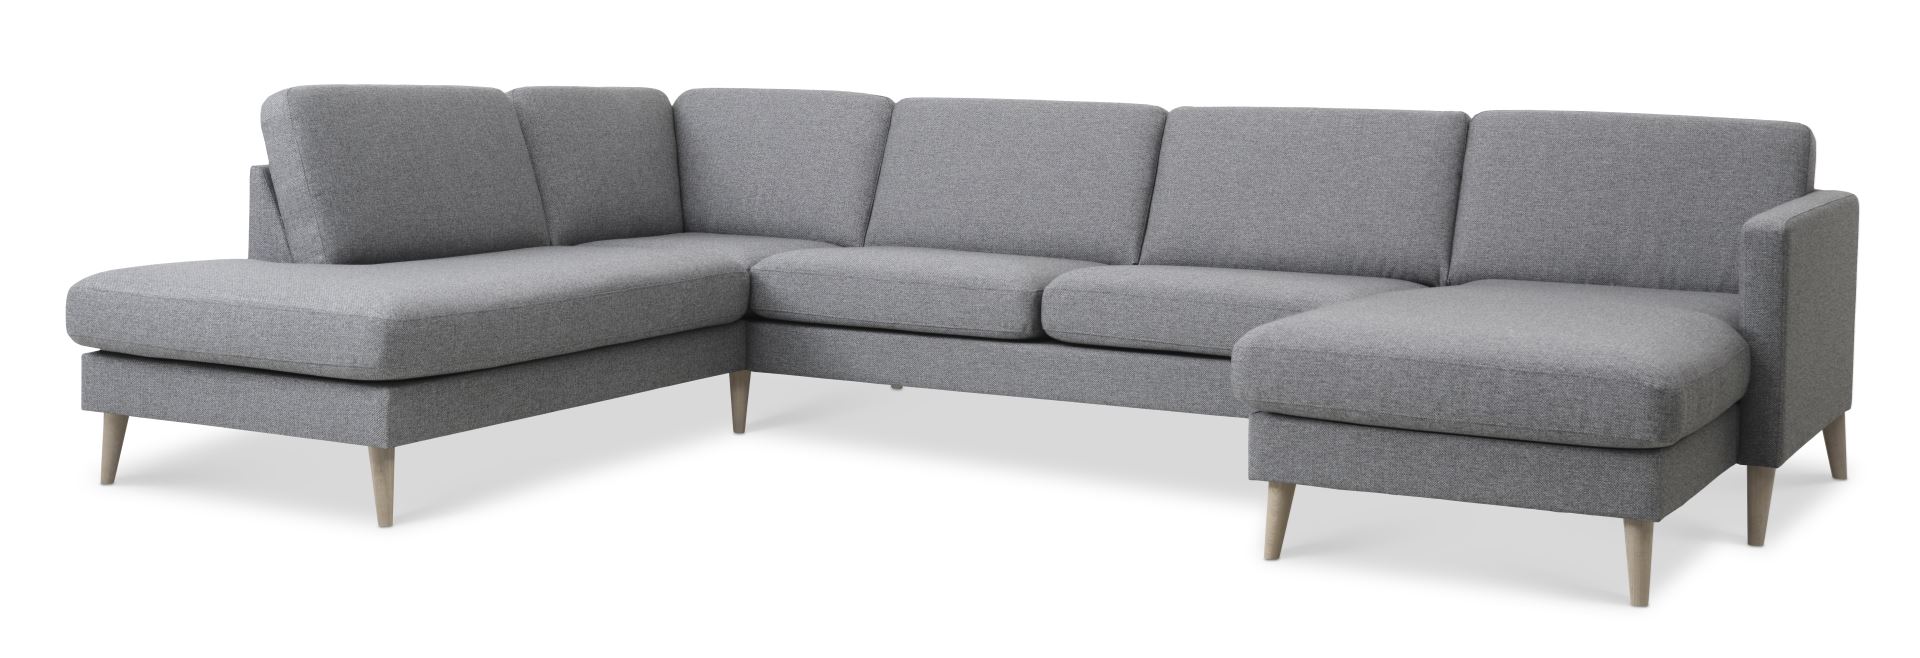 Ask sæt 54 U OE sofa, m. venstre chaiselong - lys granitgrå polyester stof og natur træ